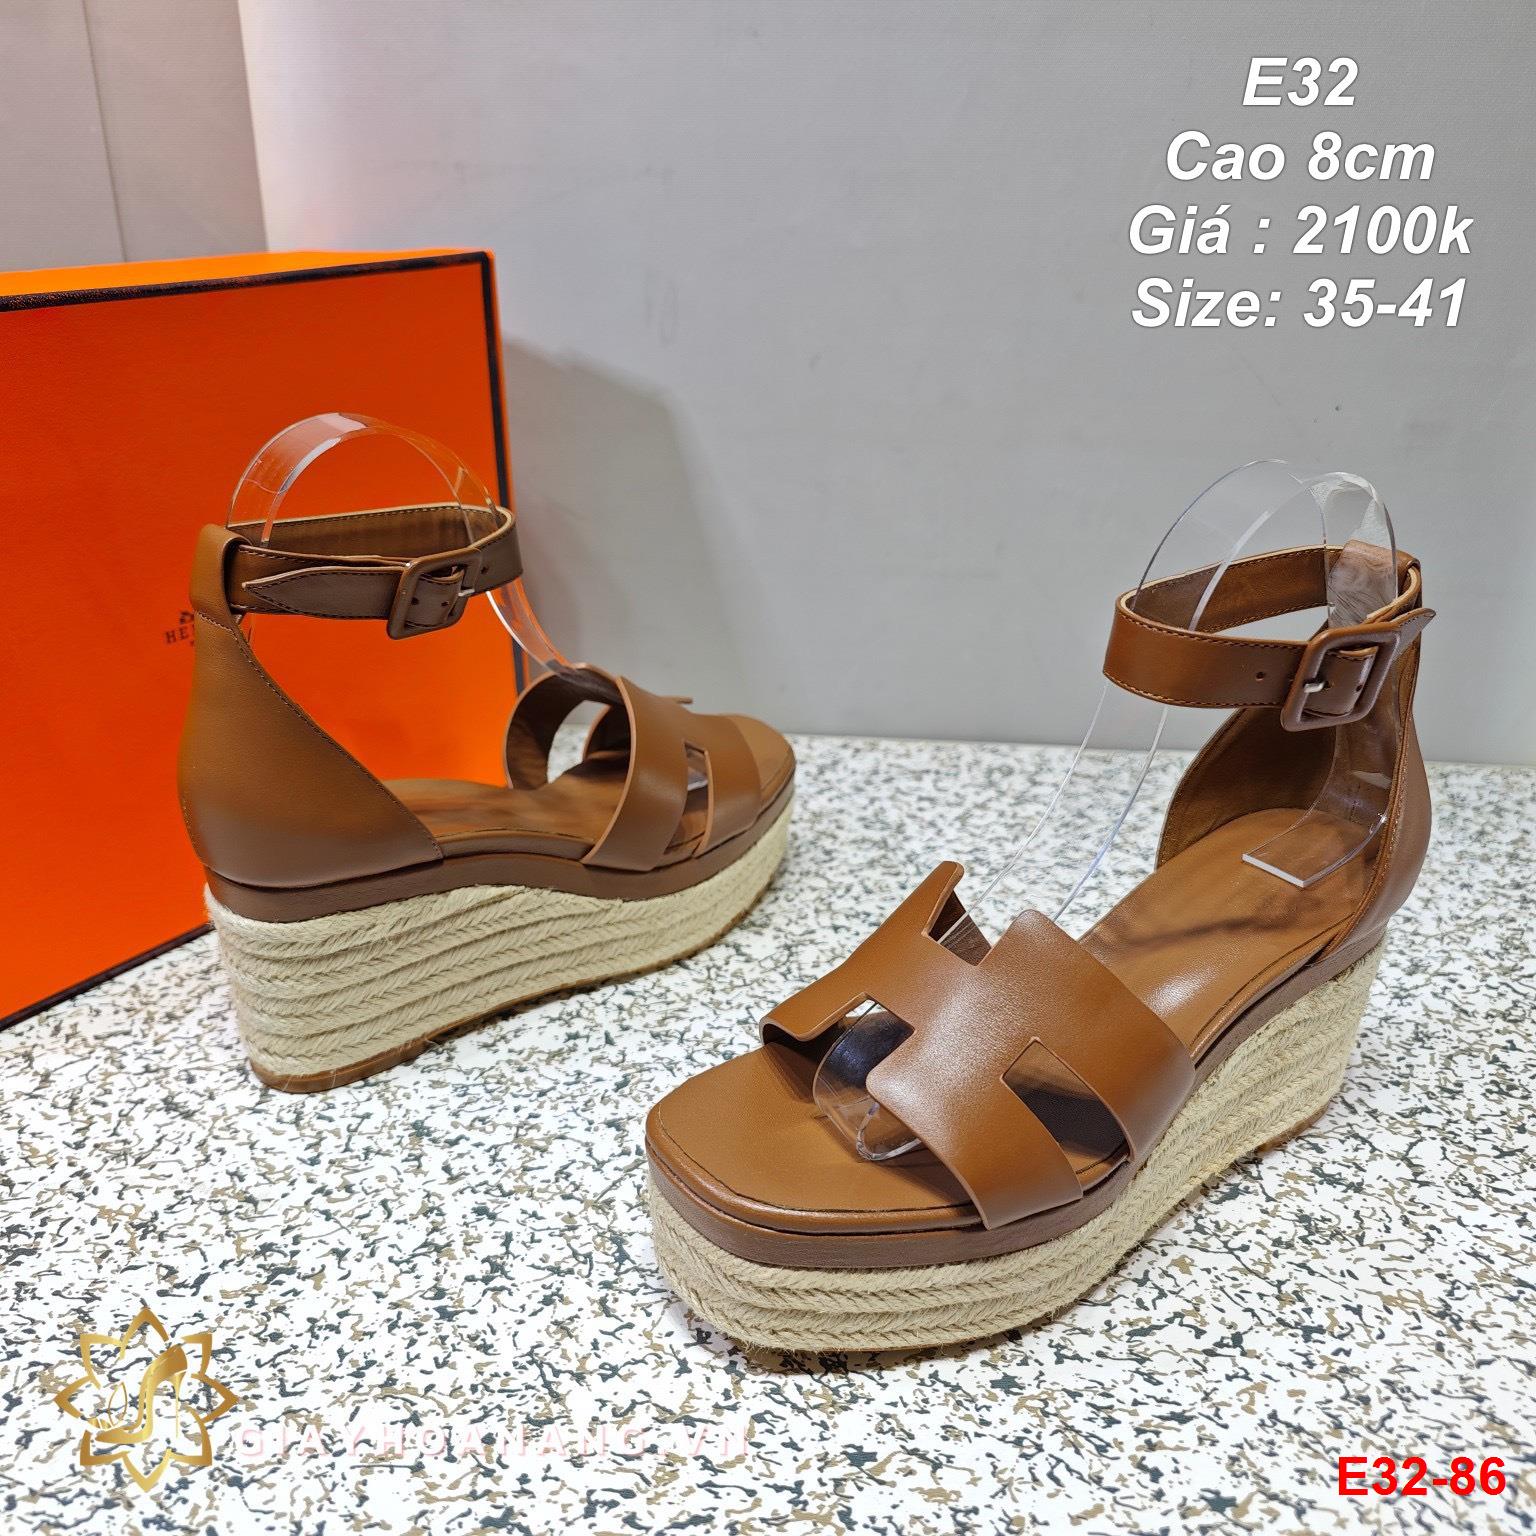 E32-86 Hermes sandal cao 8cm siêu cấp